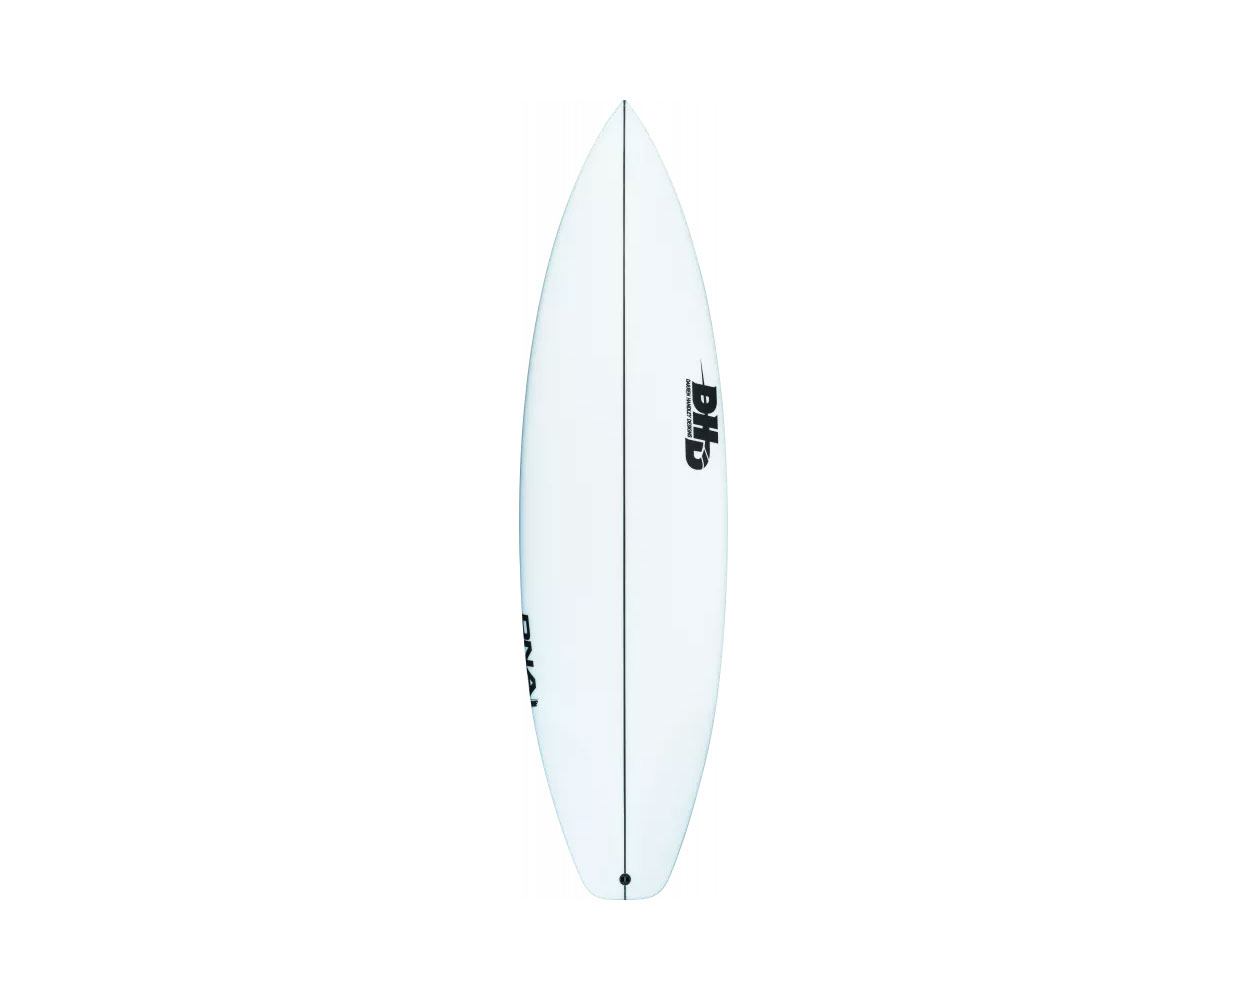 Dhd pro series mf dna fcs surfboard - ZERO GRAVITY SHOP